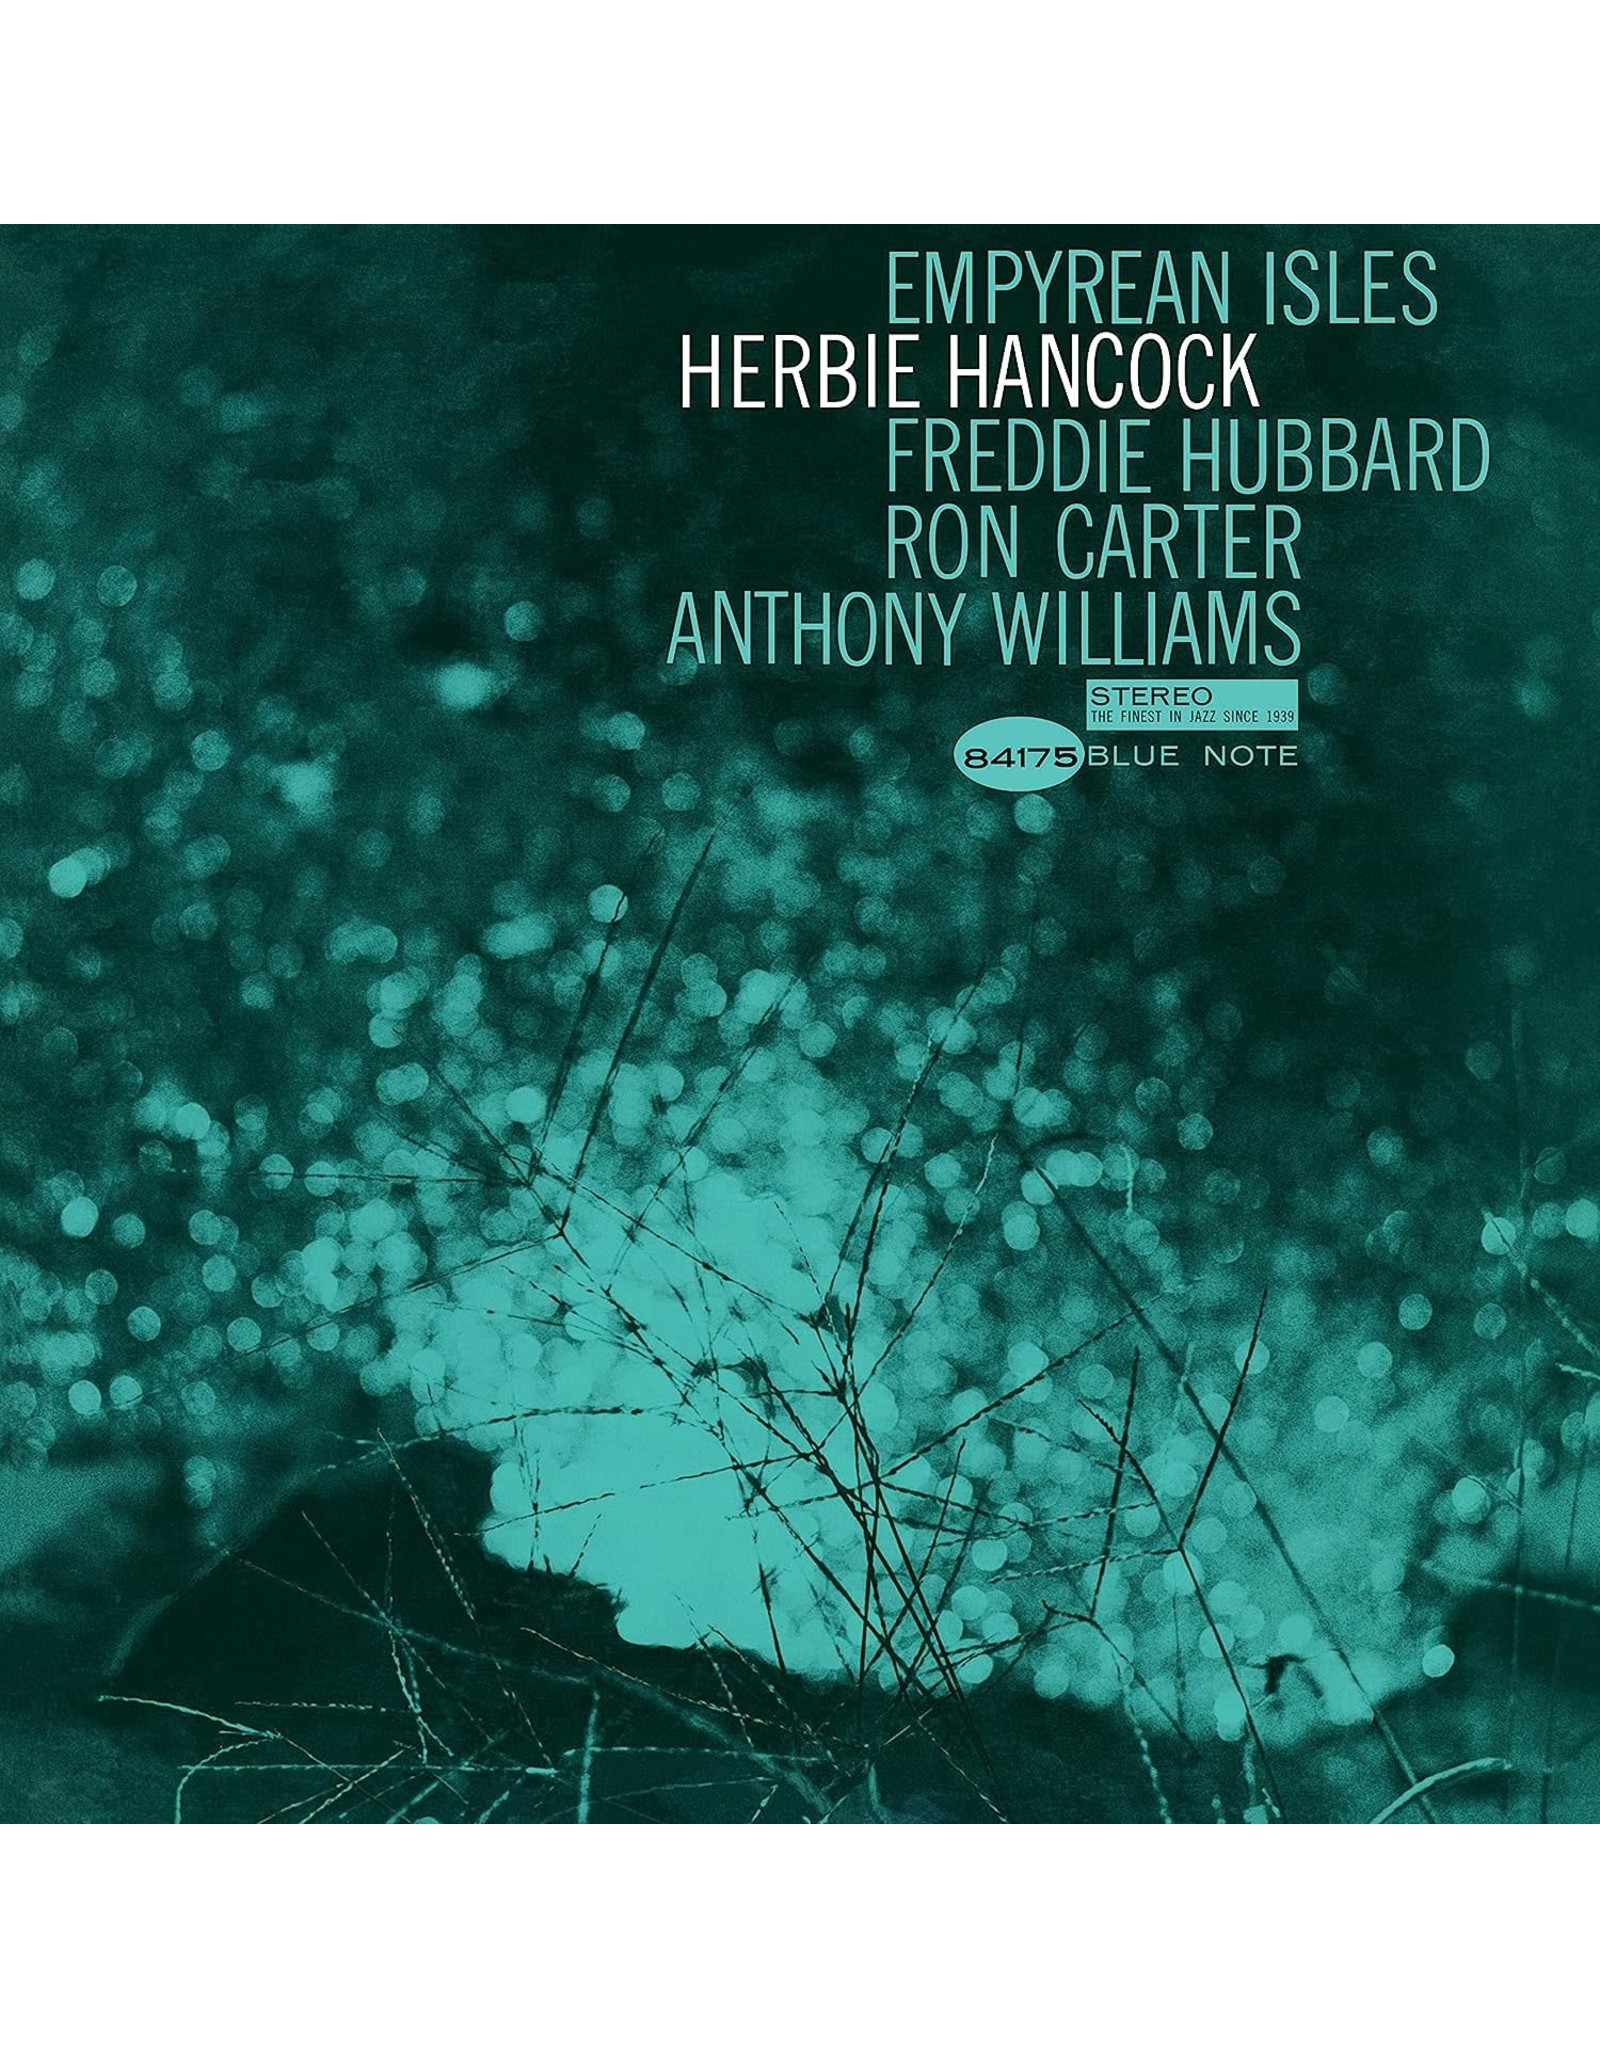 Herbie Hancock - Empyrean Isles (Blue Note Classic)